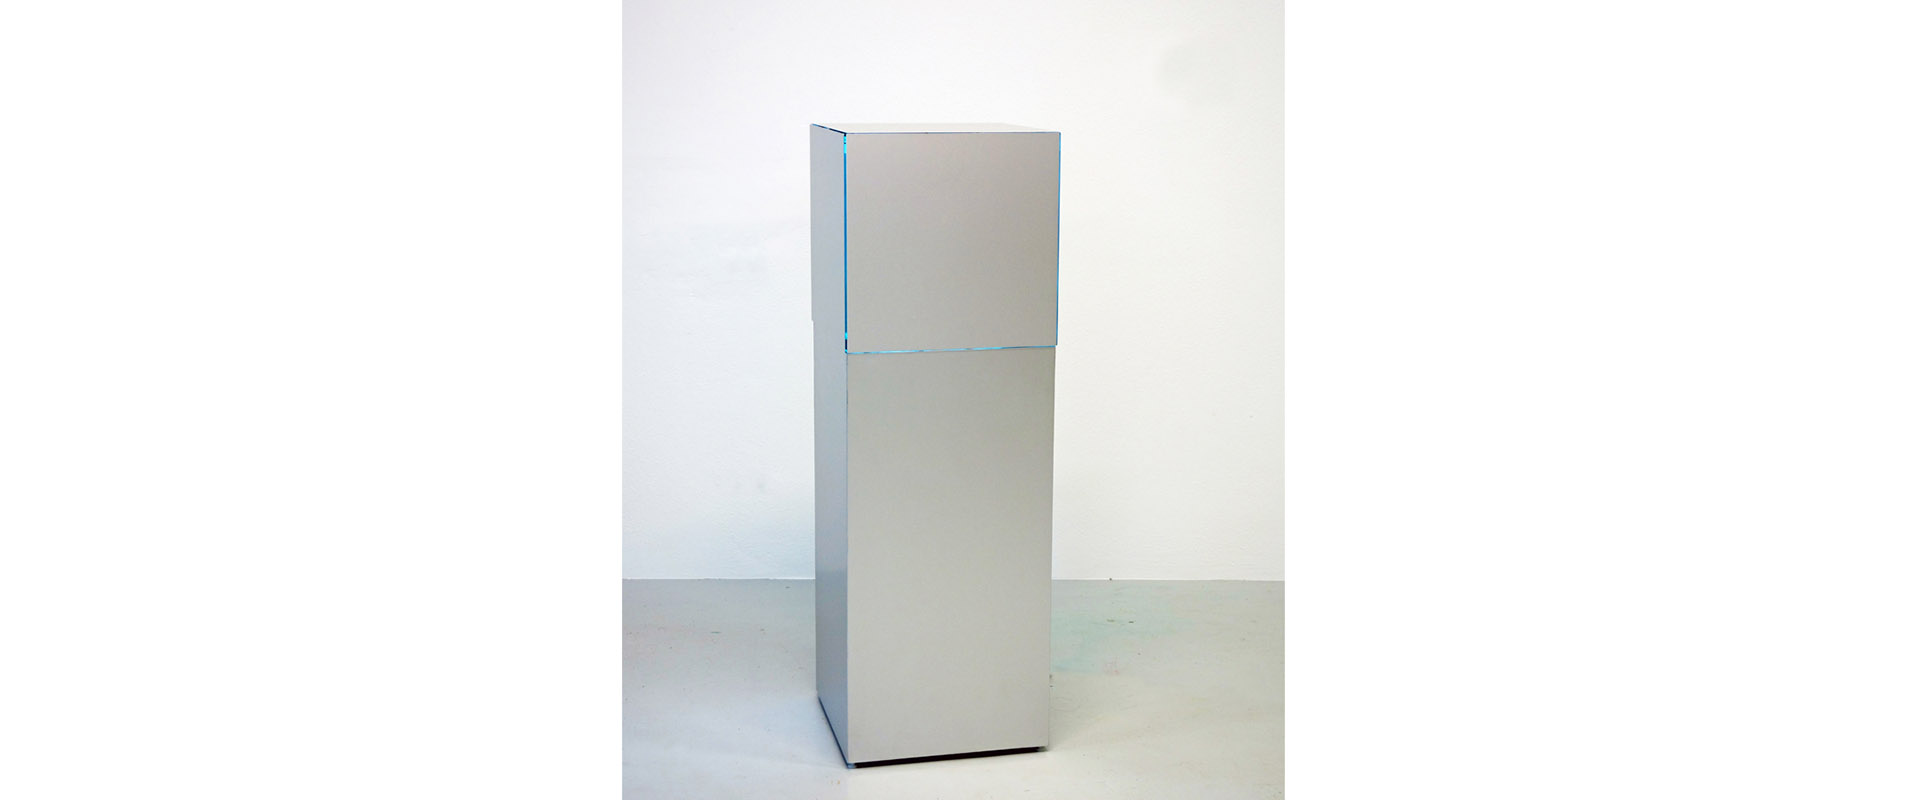 "B-Cube" - 2020, Aluminium, Elektromotor 1 U/min, Neonsystem Blauentladung, 35,5 bis 40,5 x 35,5 bis x 40,5 x 107 cm, Ansicht 2